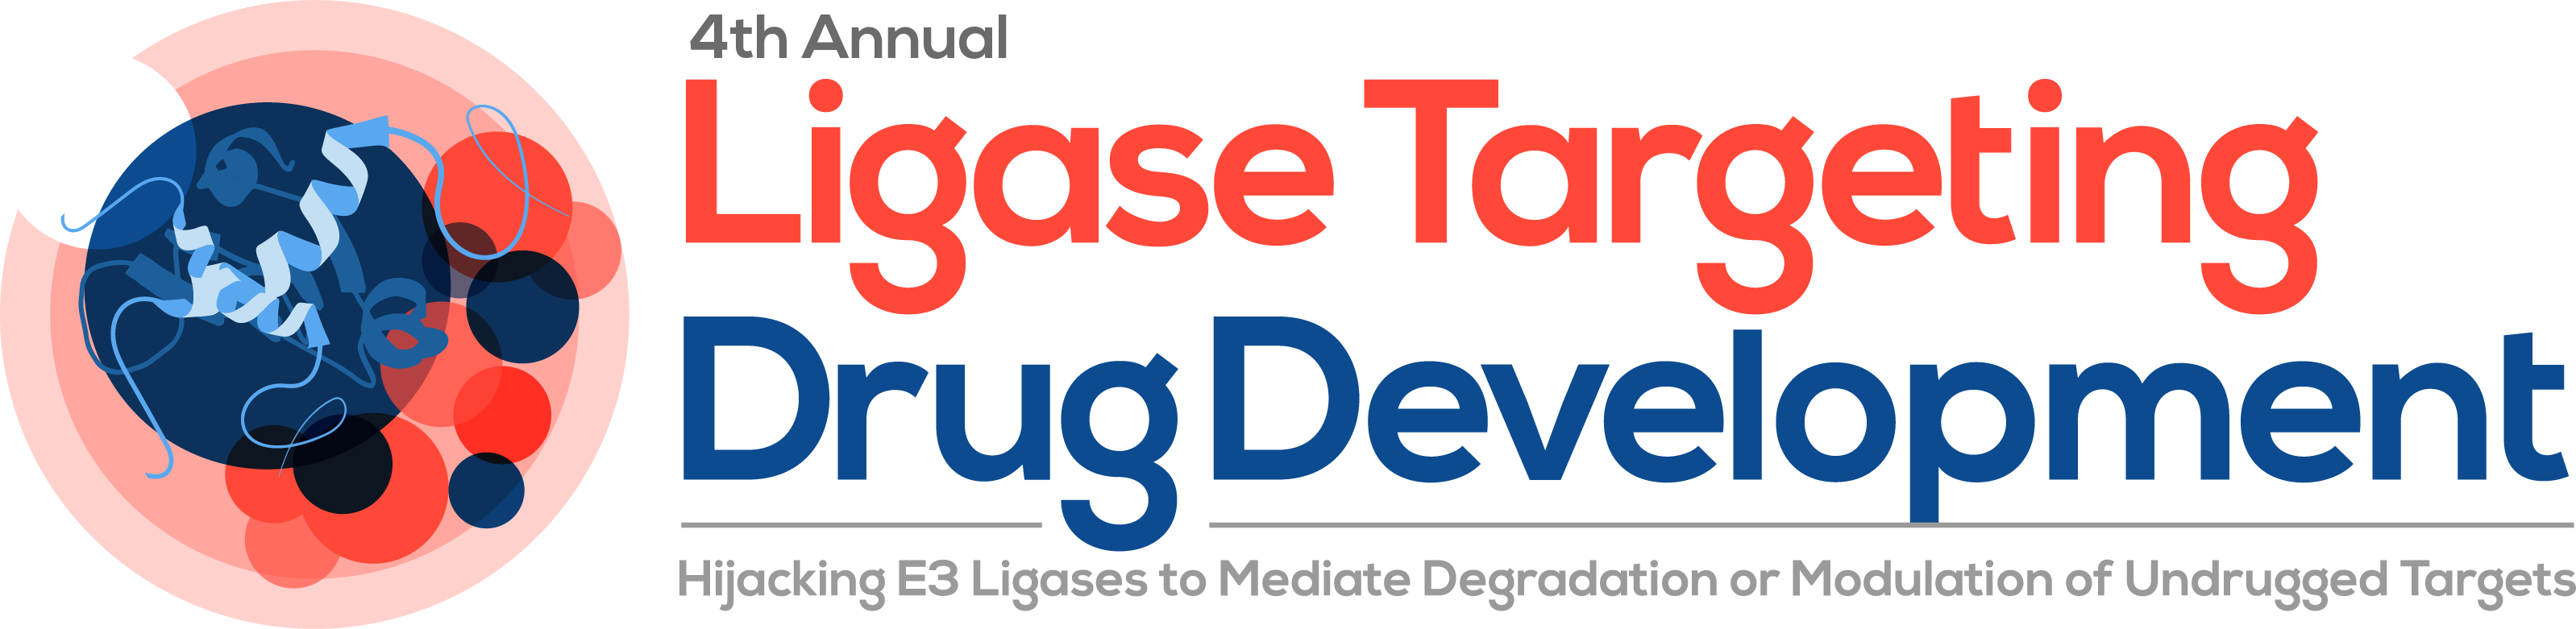 4th Annual Ligase Targeting Drug Development logo